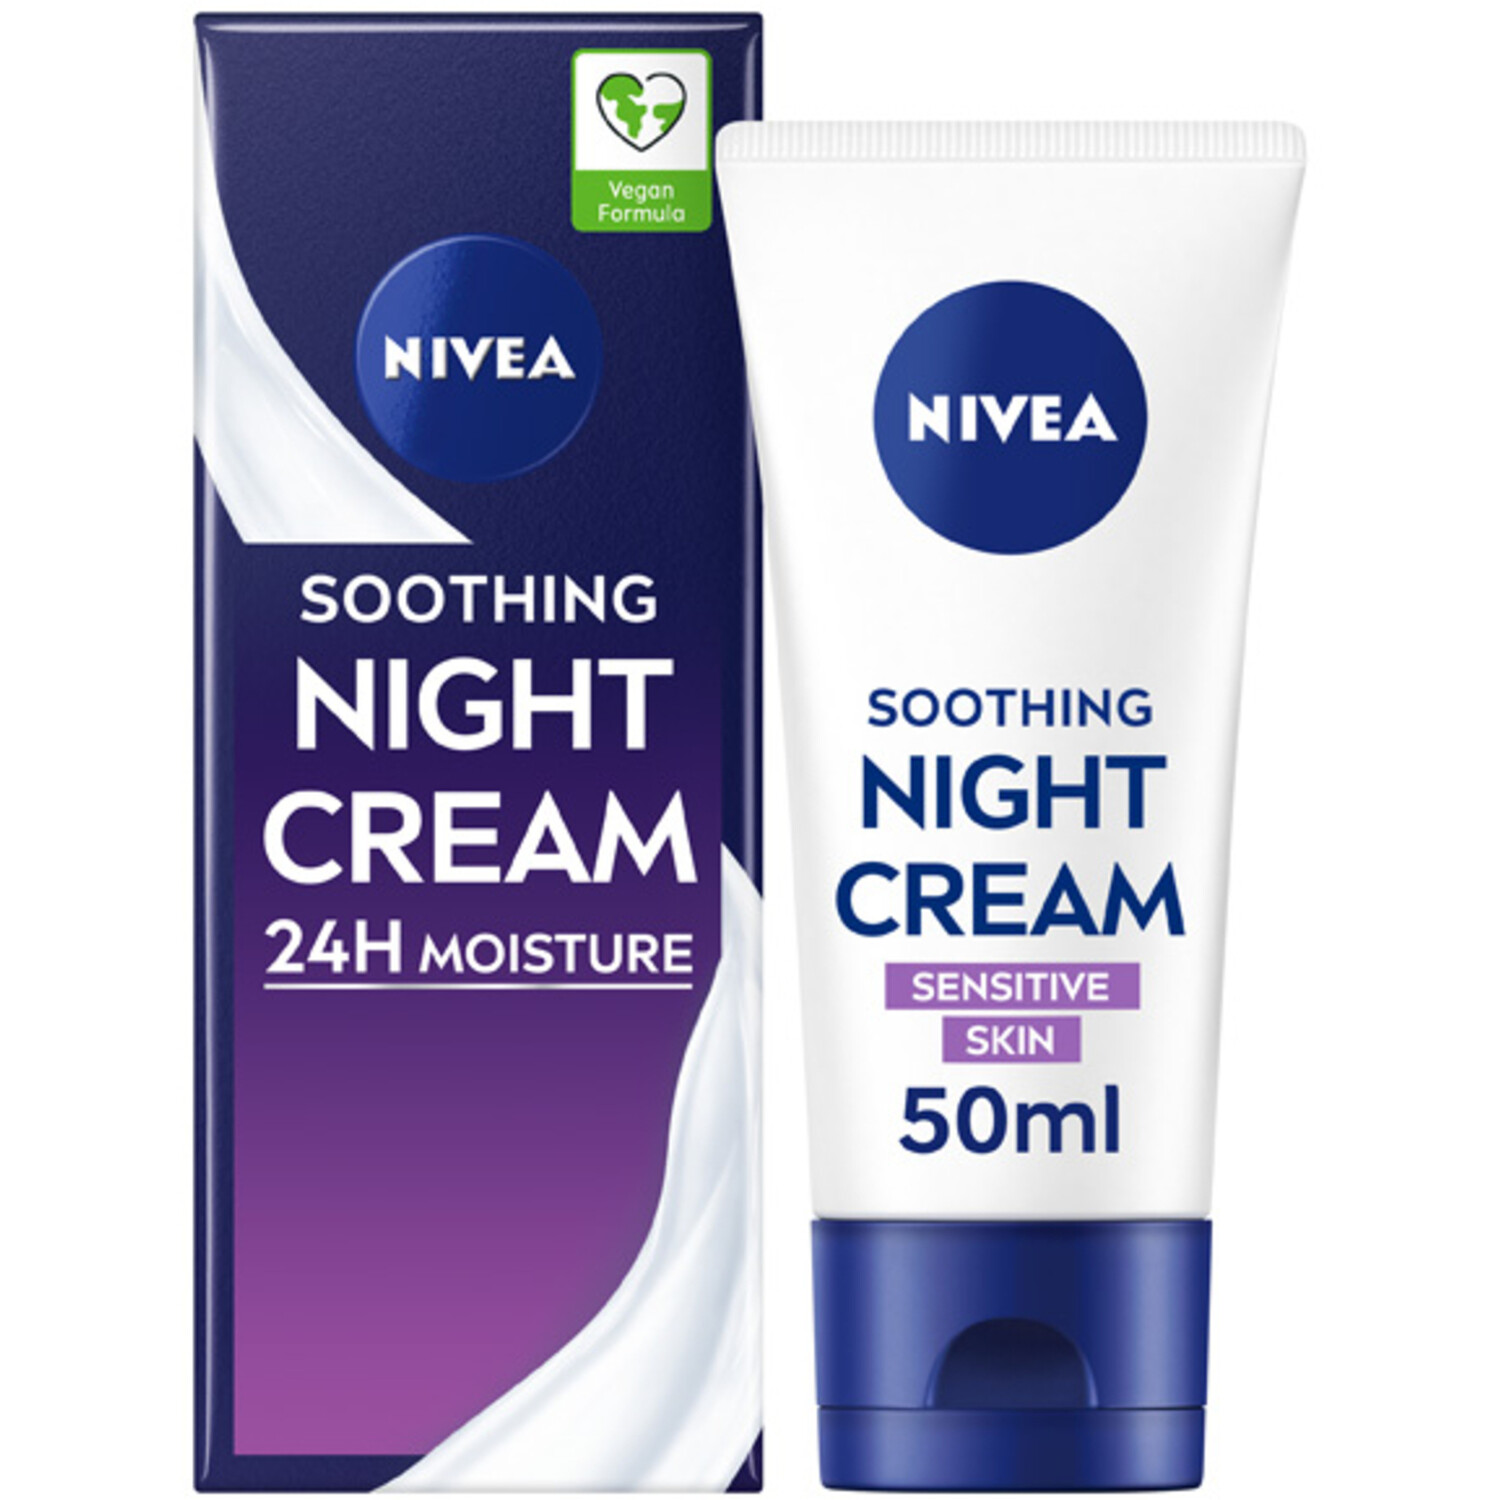 Nivea Sensitive Skin Soothing Night Cream 50ml - White Image